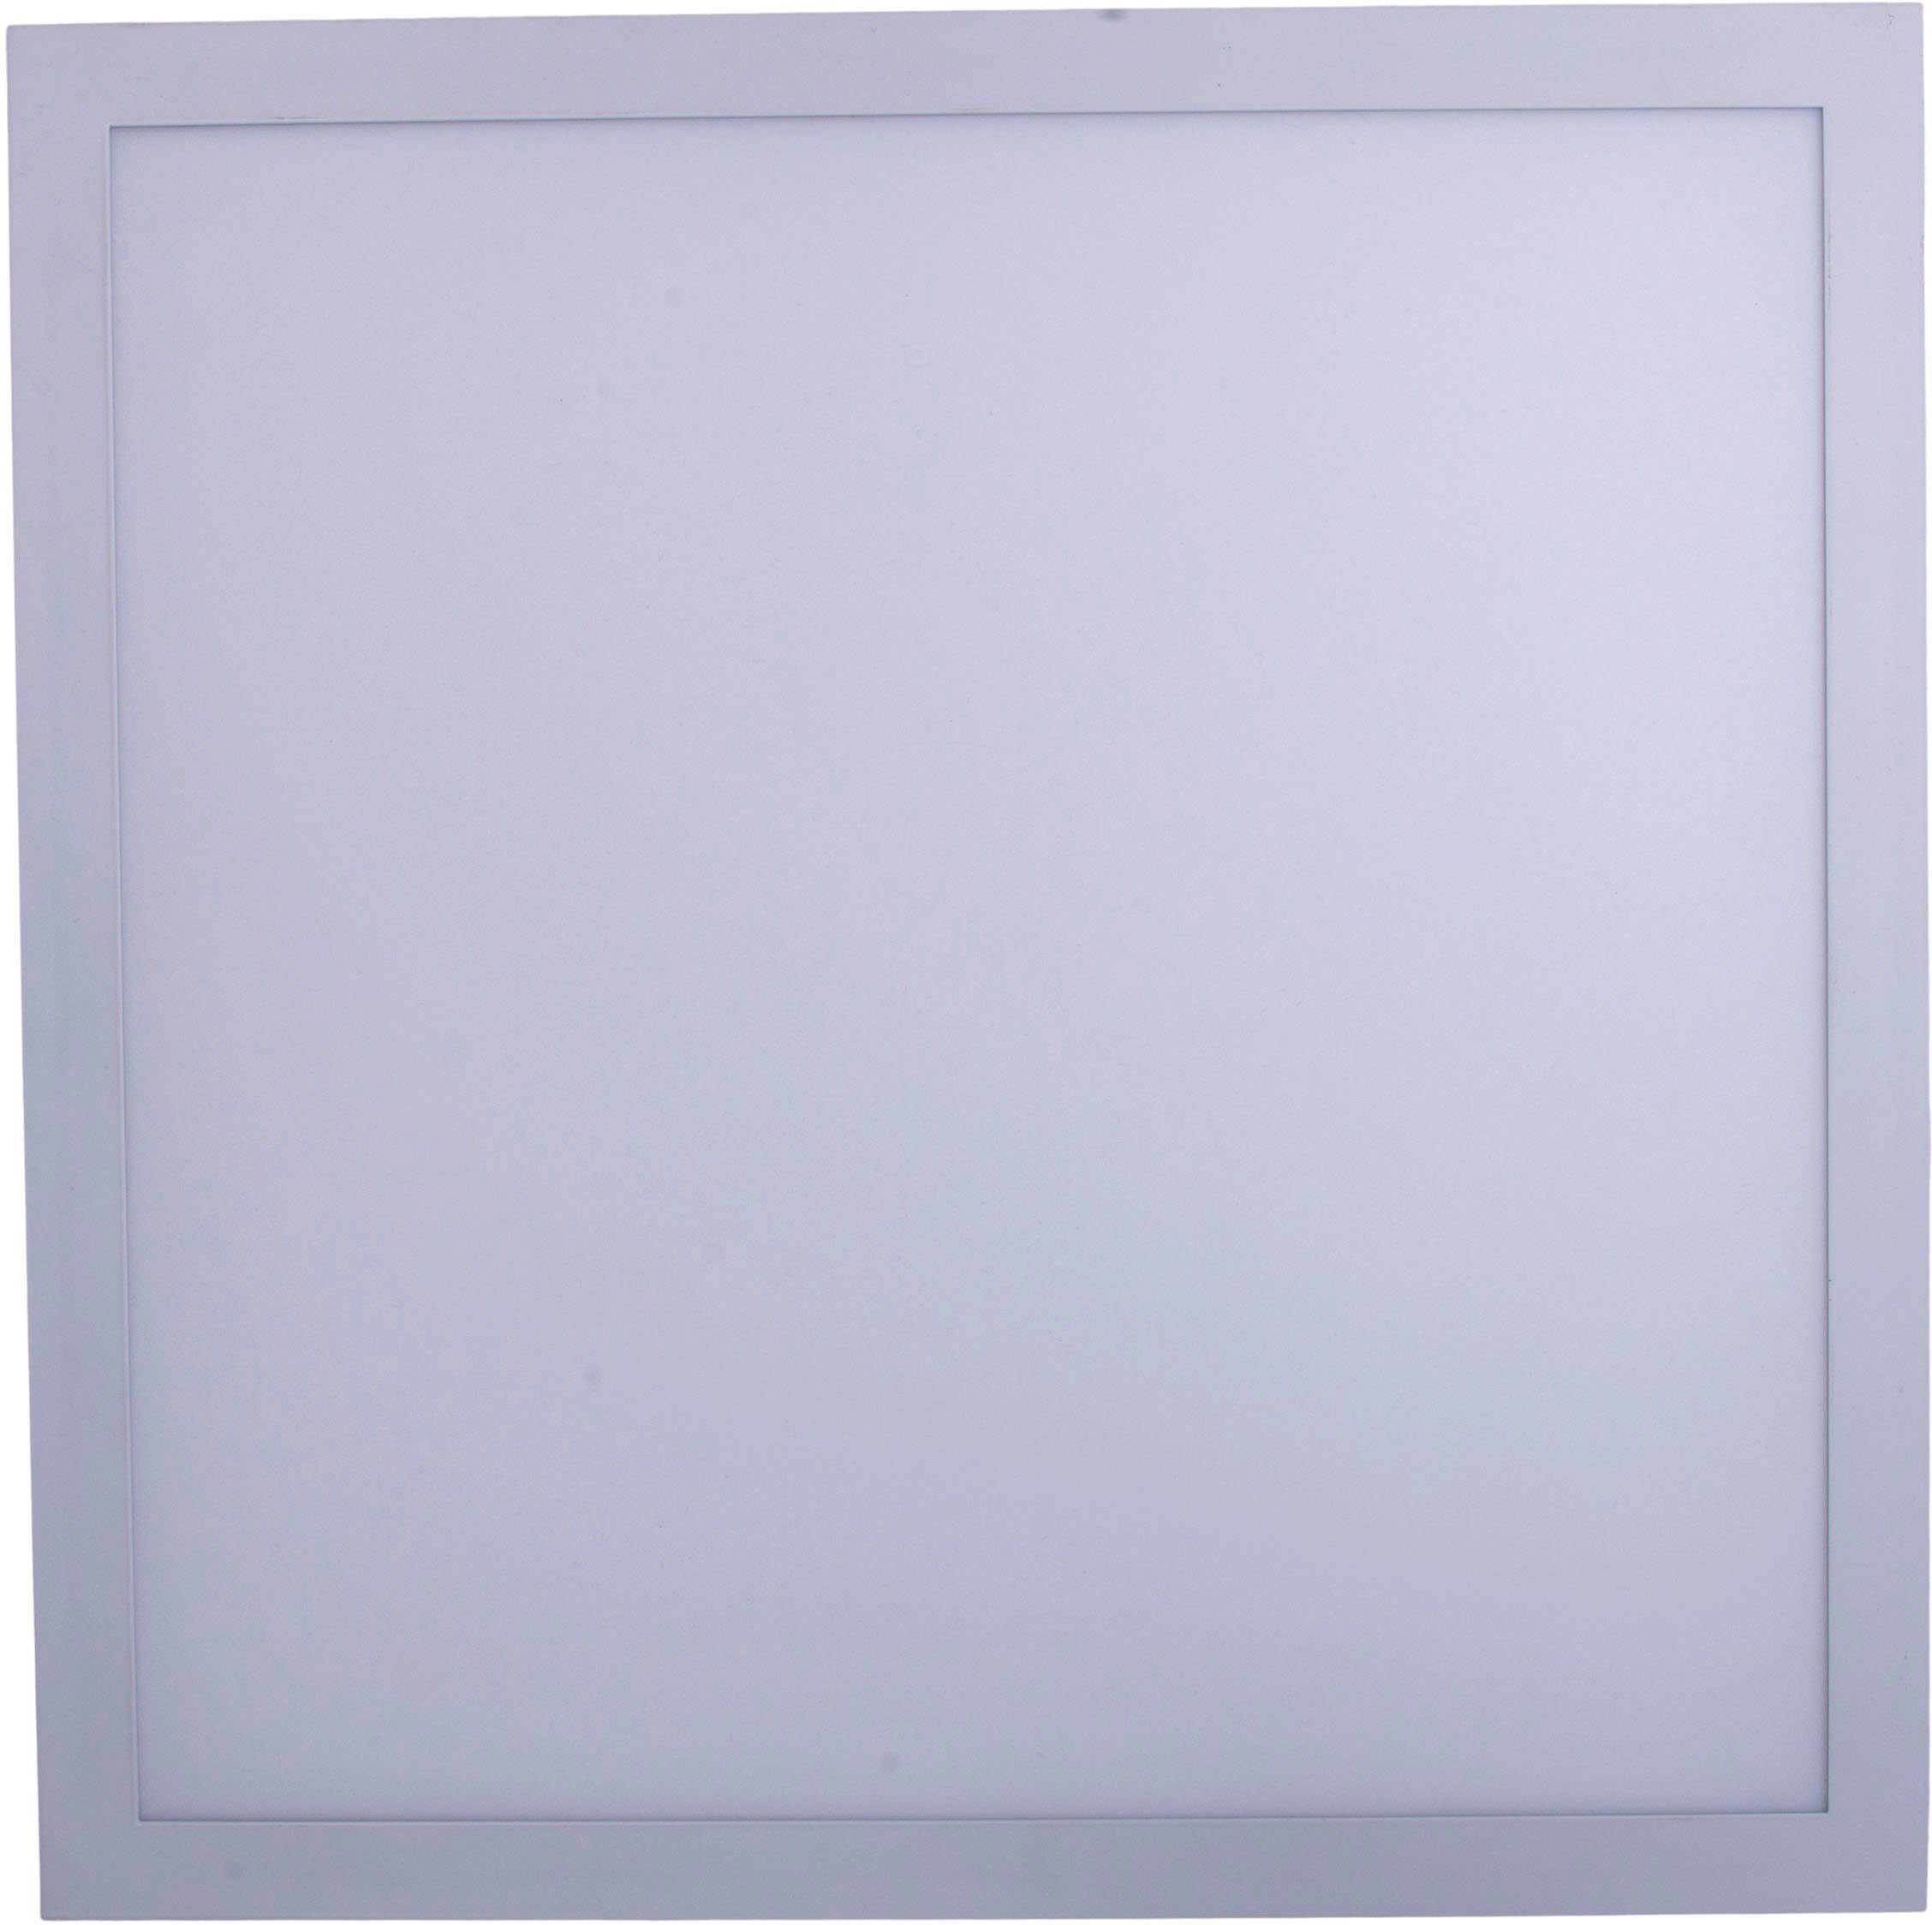 Panel weiß neutralweiß fest 6cm, Lichtfarbe LED, Nicola, Neutralweiß, Aufbaupanel LED näve integriert, 120 LED H: 45x45cm,